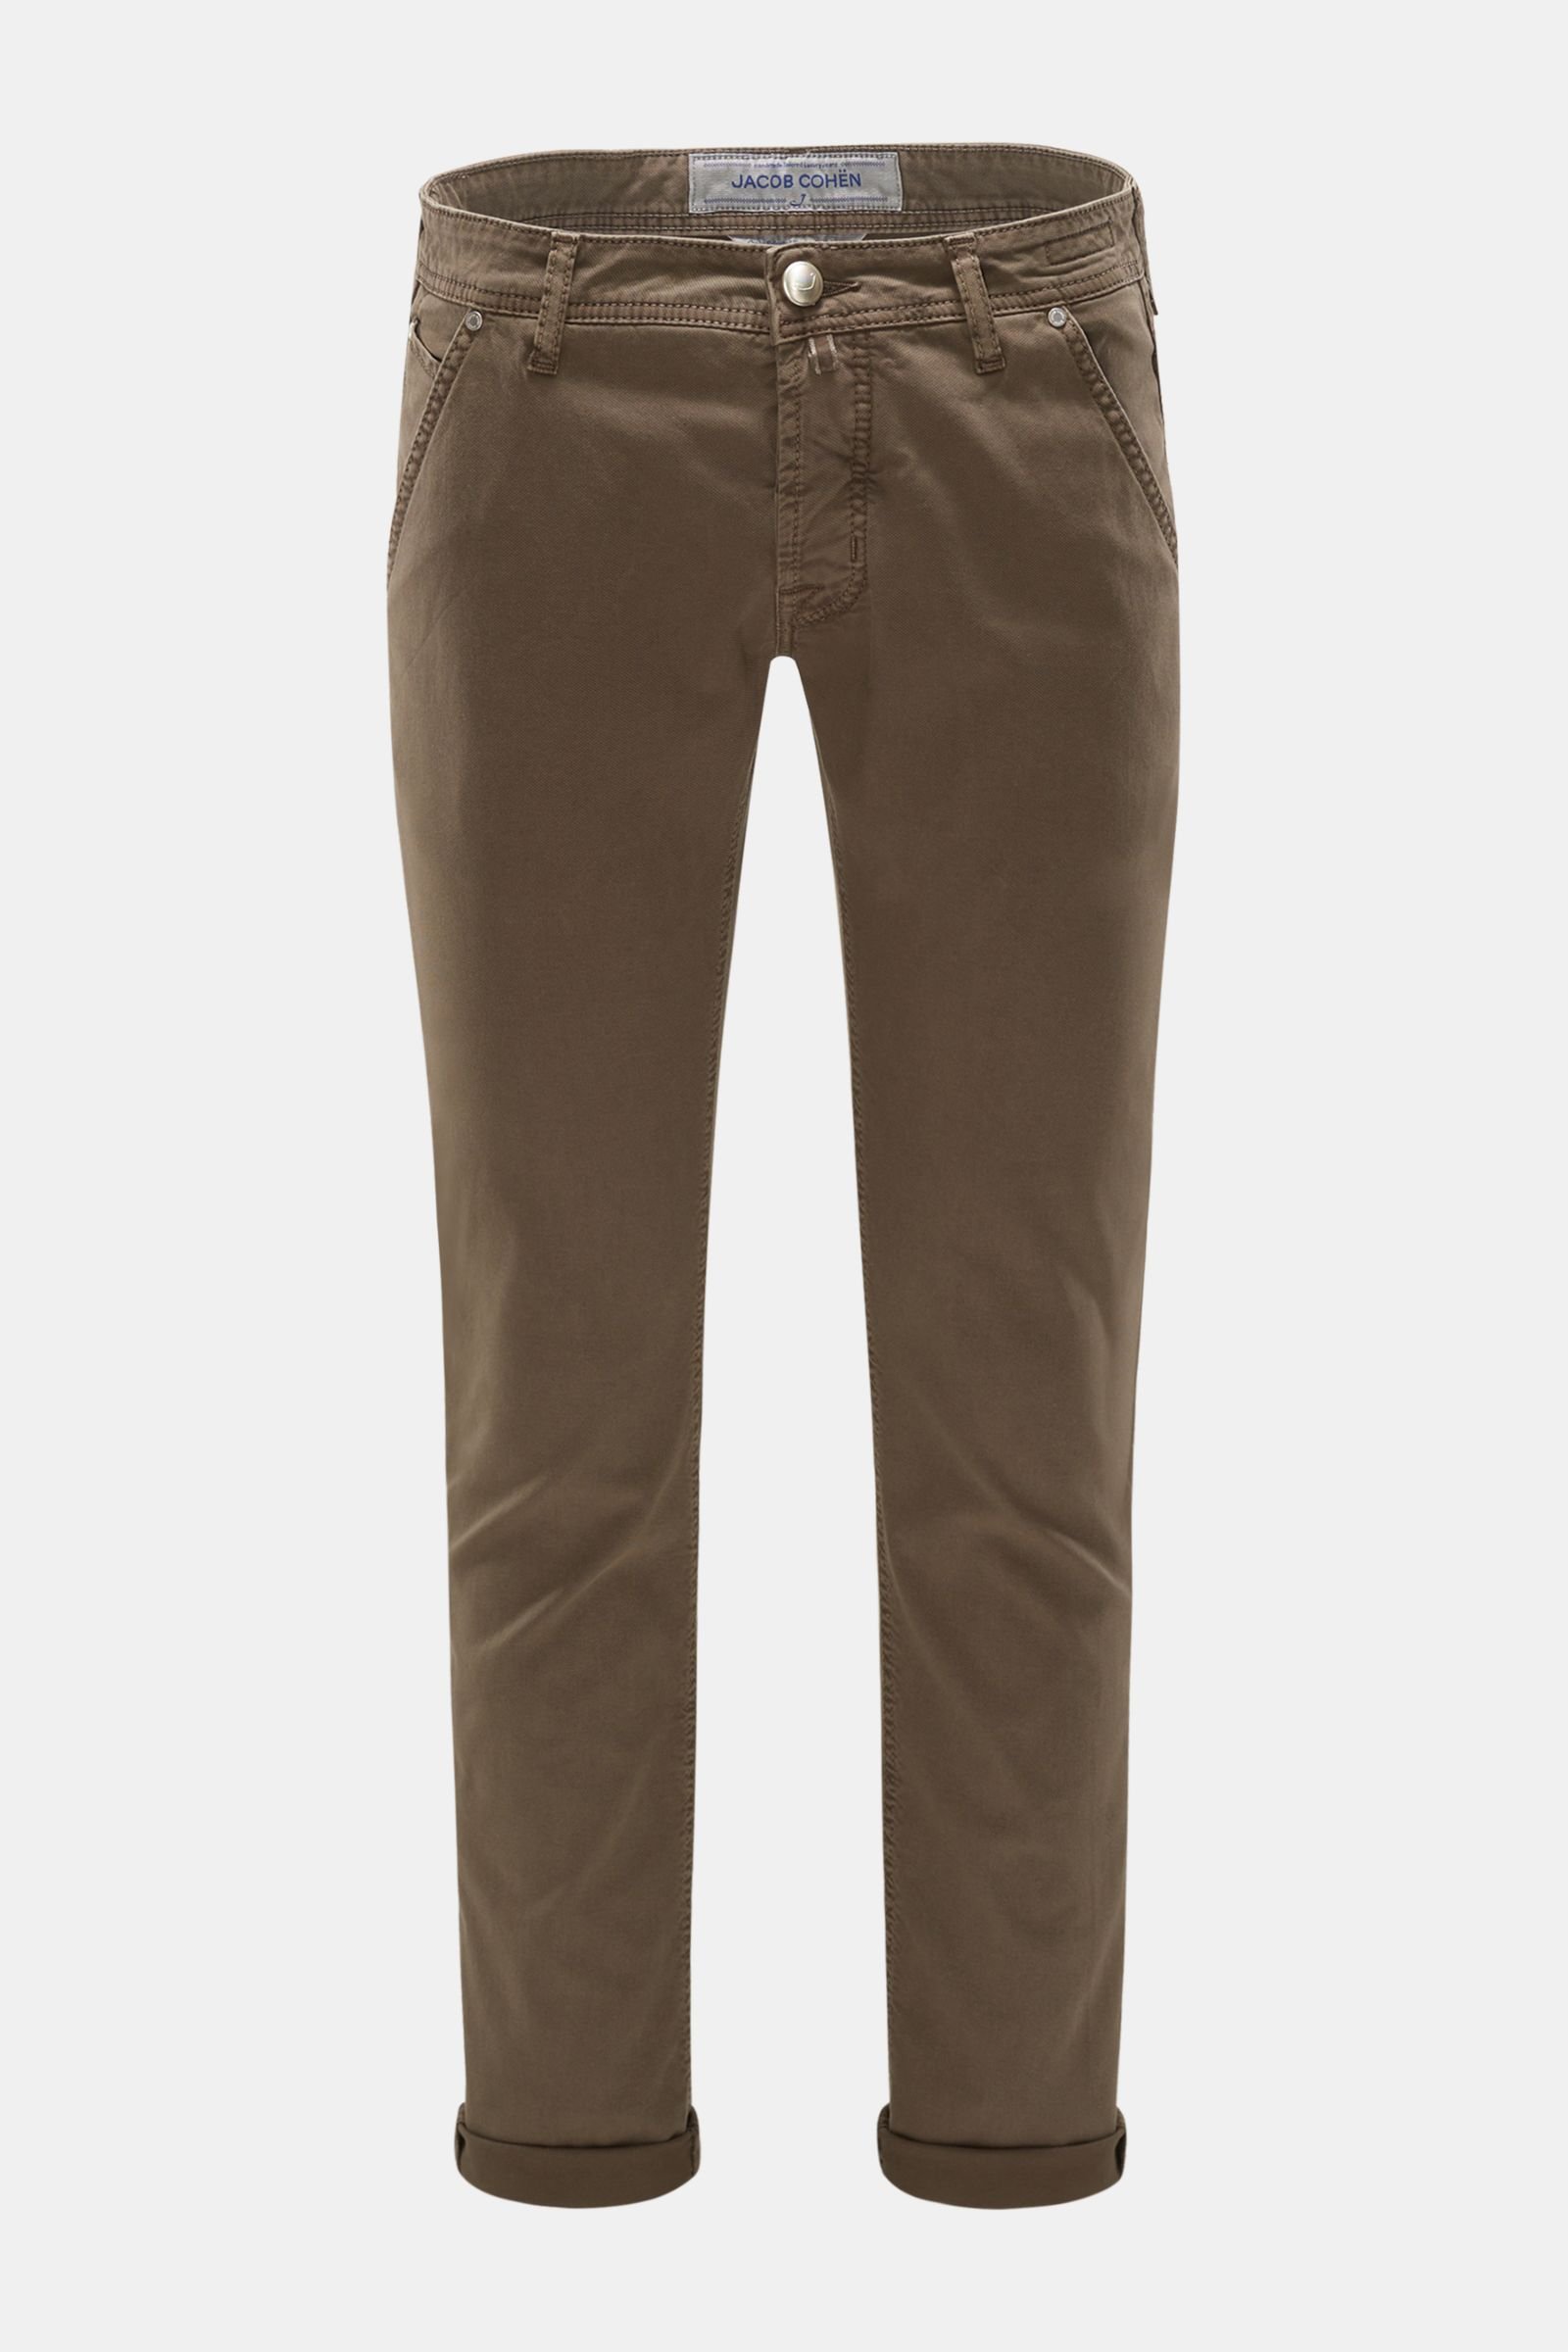 Cotton trousers 'J613 Comfort Slim Fit' brown